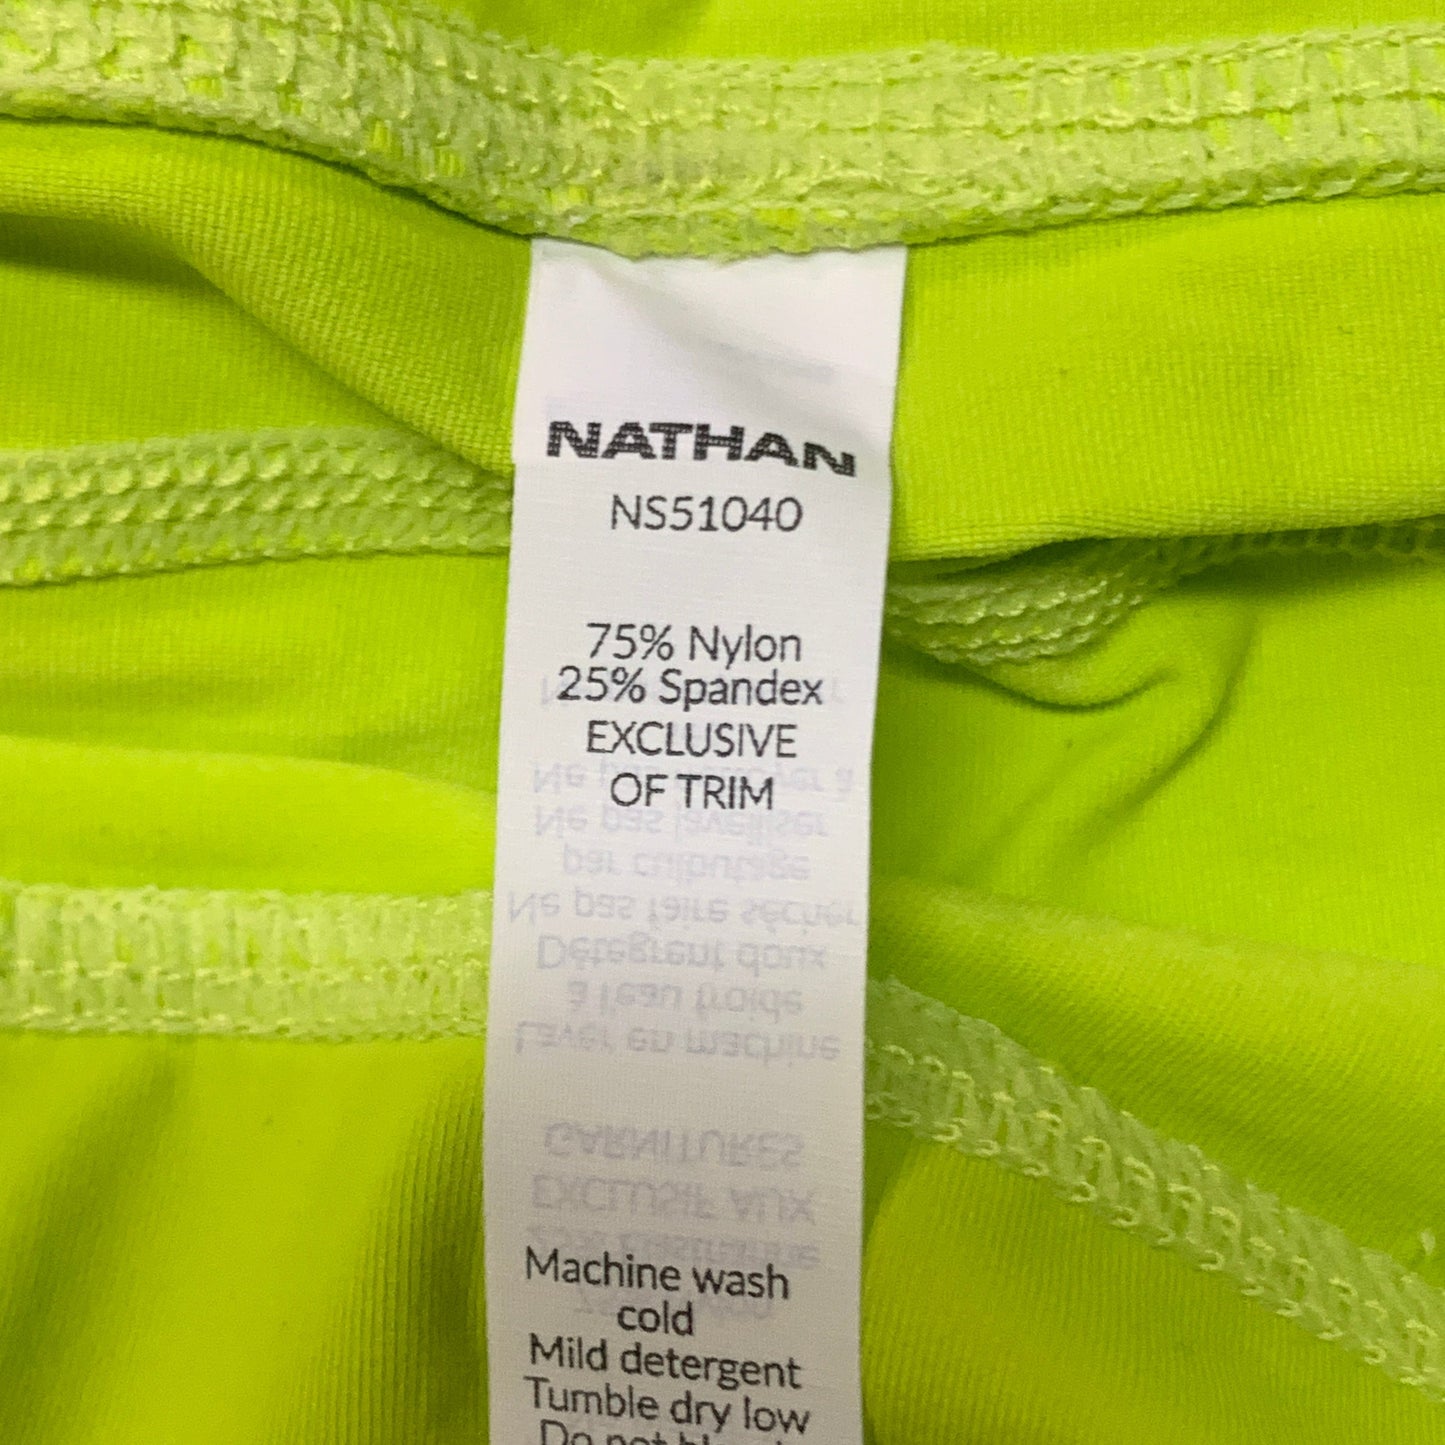 NATHAN Interval 3" Inseam Bike Short Women's Bright Lime Sz L NS51040-50119-L